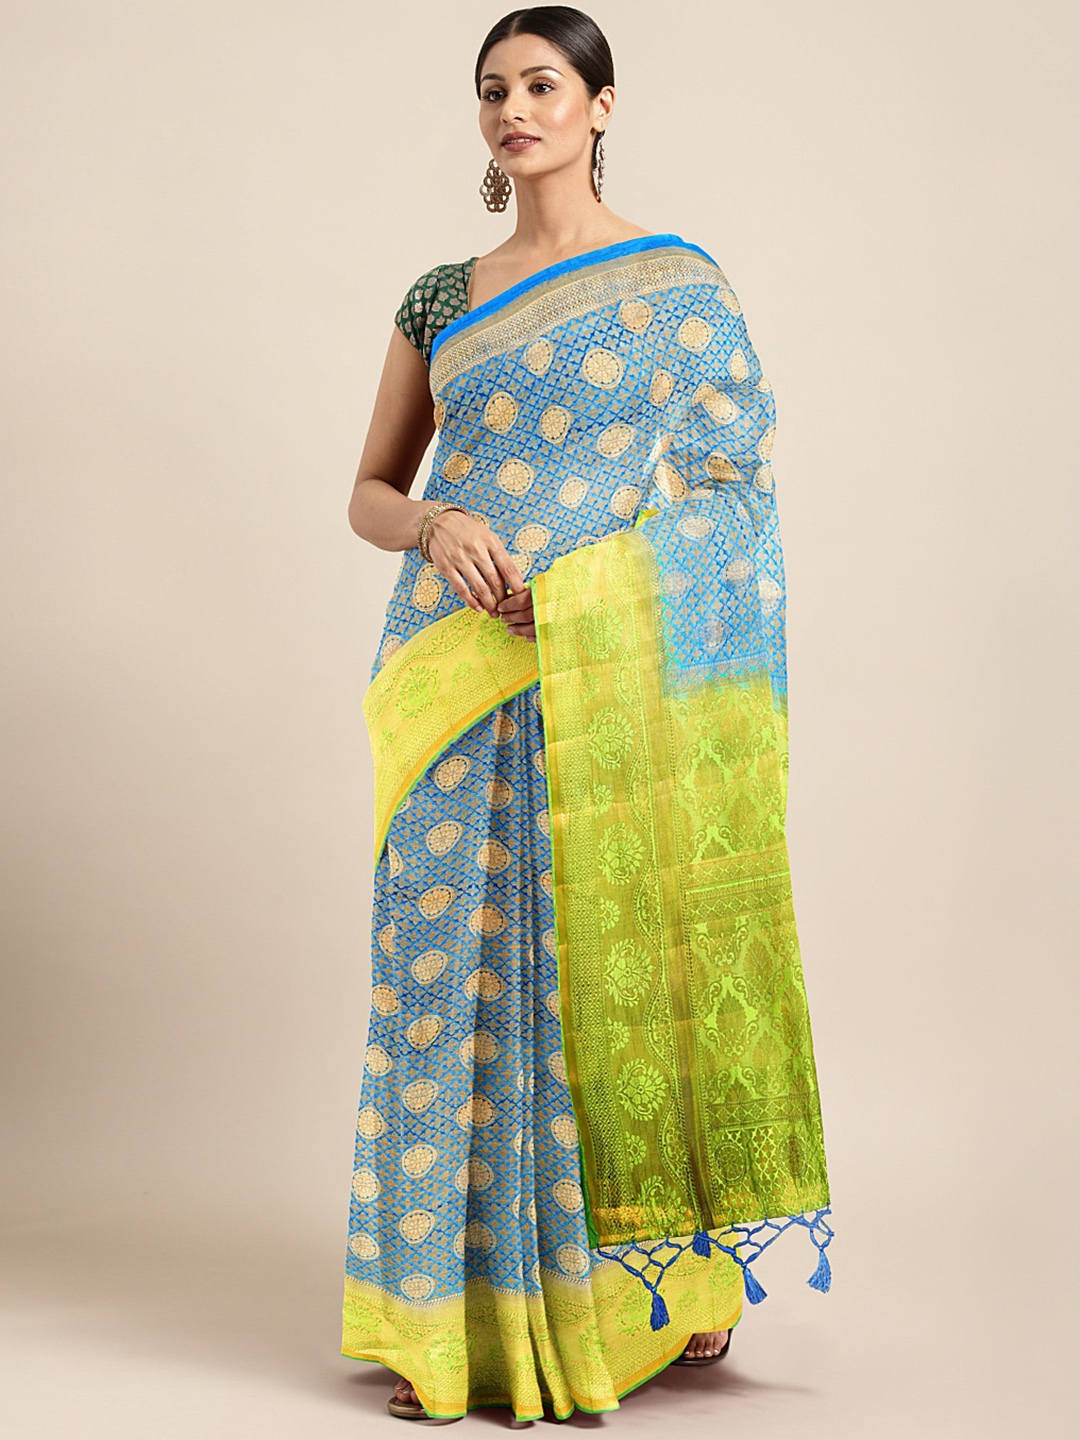 The Chennai Silks Classicate Blue & Green Woven Design Viscose Rayon Dupion Saree Price in India